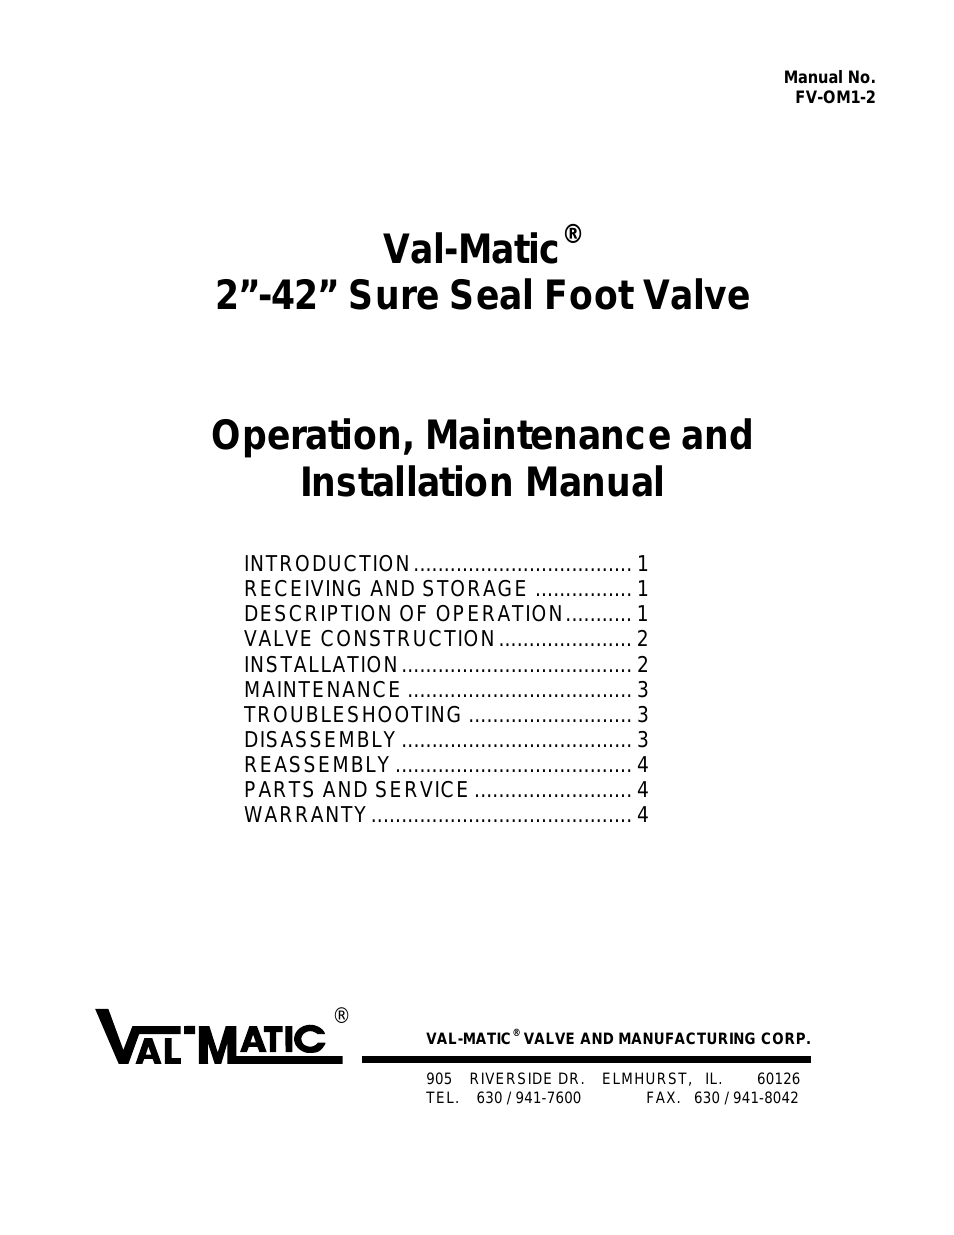 2-42 Sure Seal Foot Valve